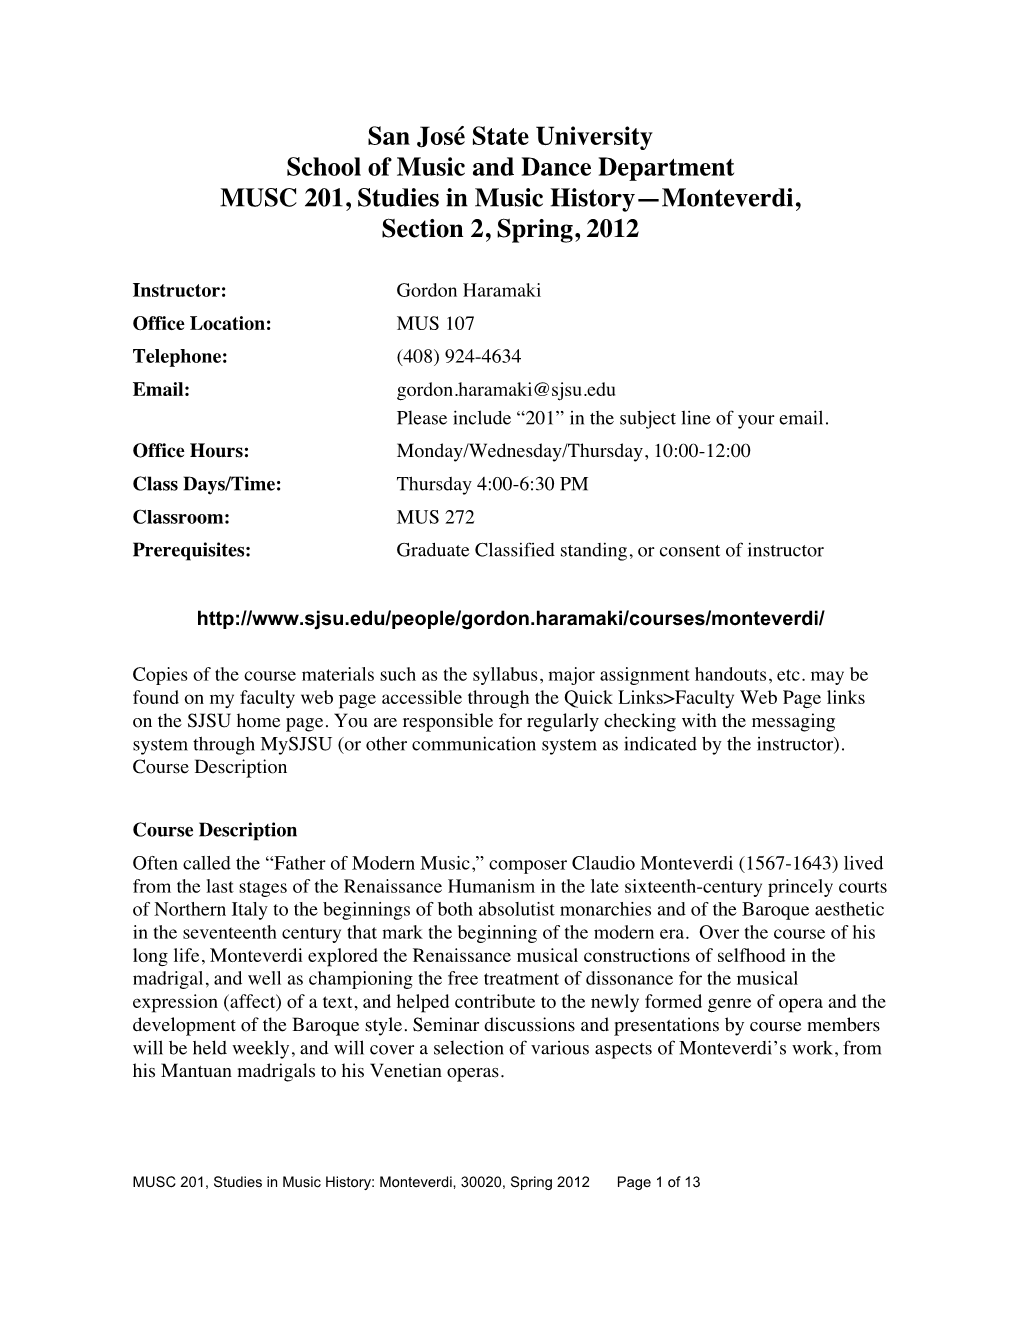 San José State University School of Music and Dance Department MUSC 201, Studies in Music History—Monteverdi, Section 2, Spring, 2012